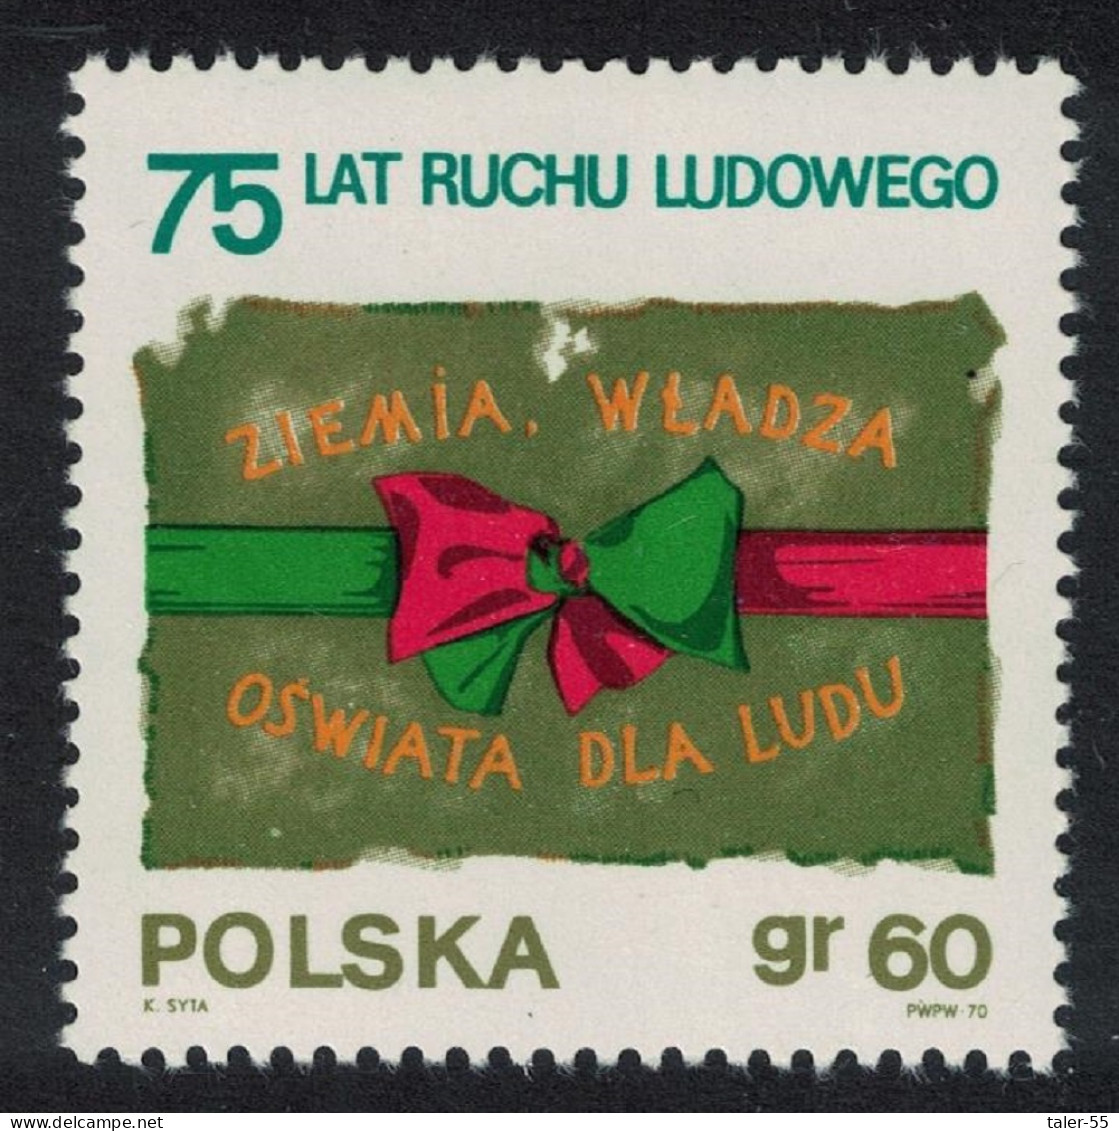 Poland 75th Anniversary Of Peasant Movement 1970 MNH SG#1987 - Nuevos